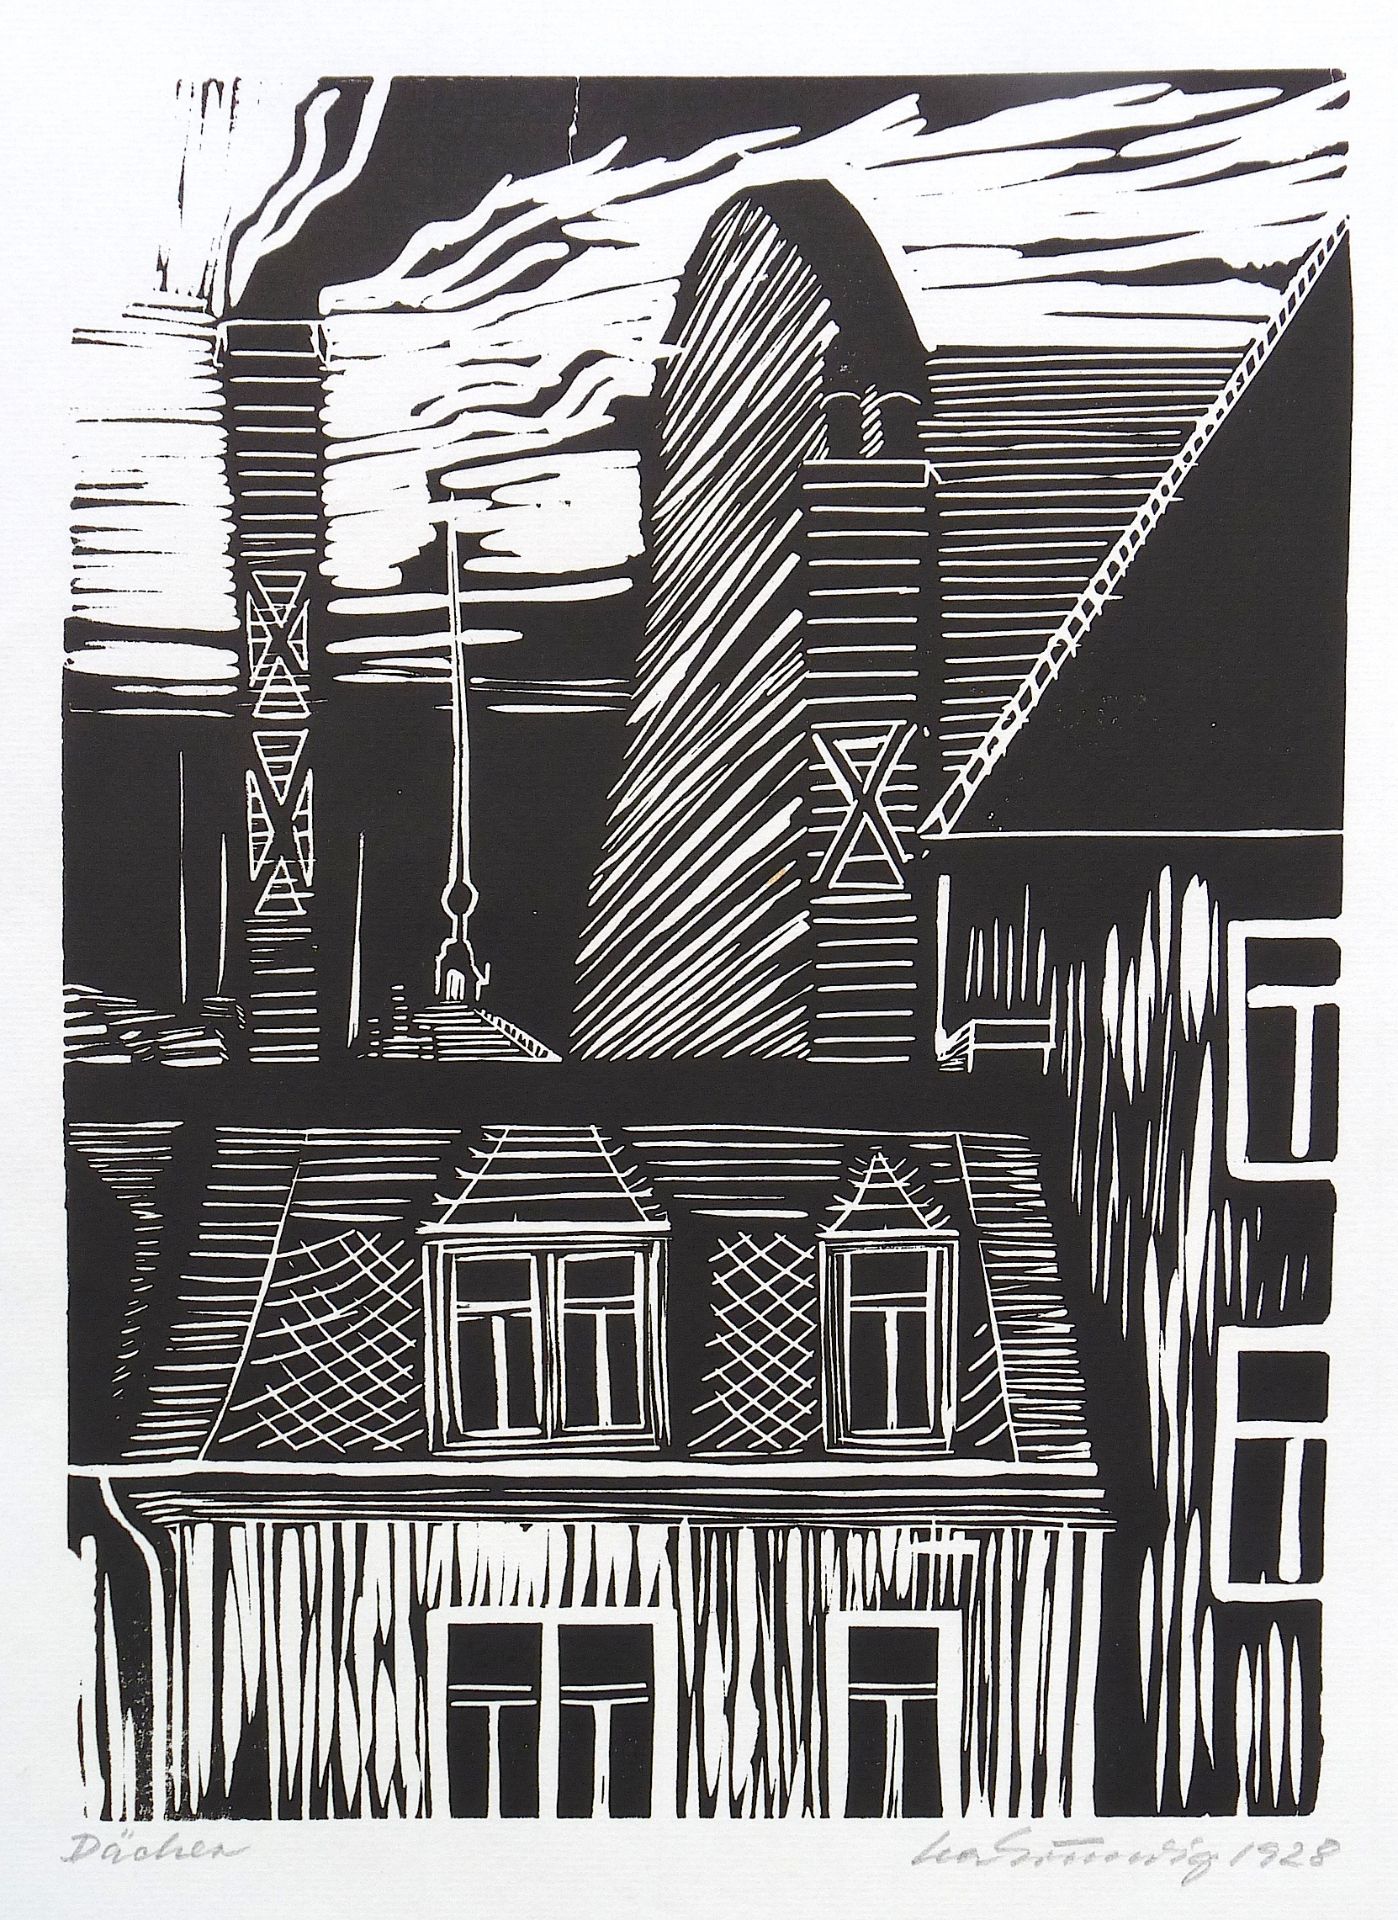 GRUNDIG, LEA: "Dächer", 1928